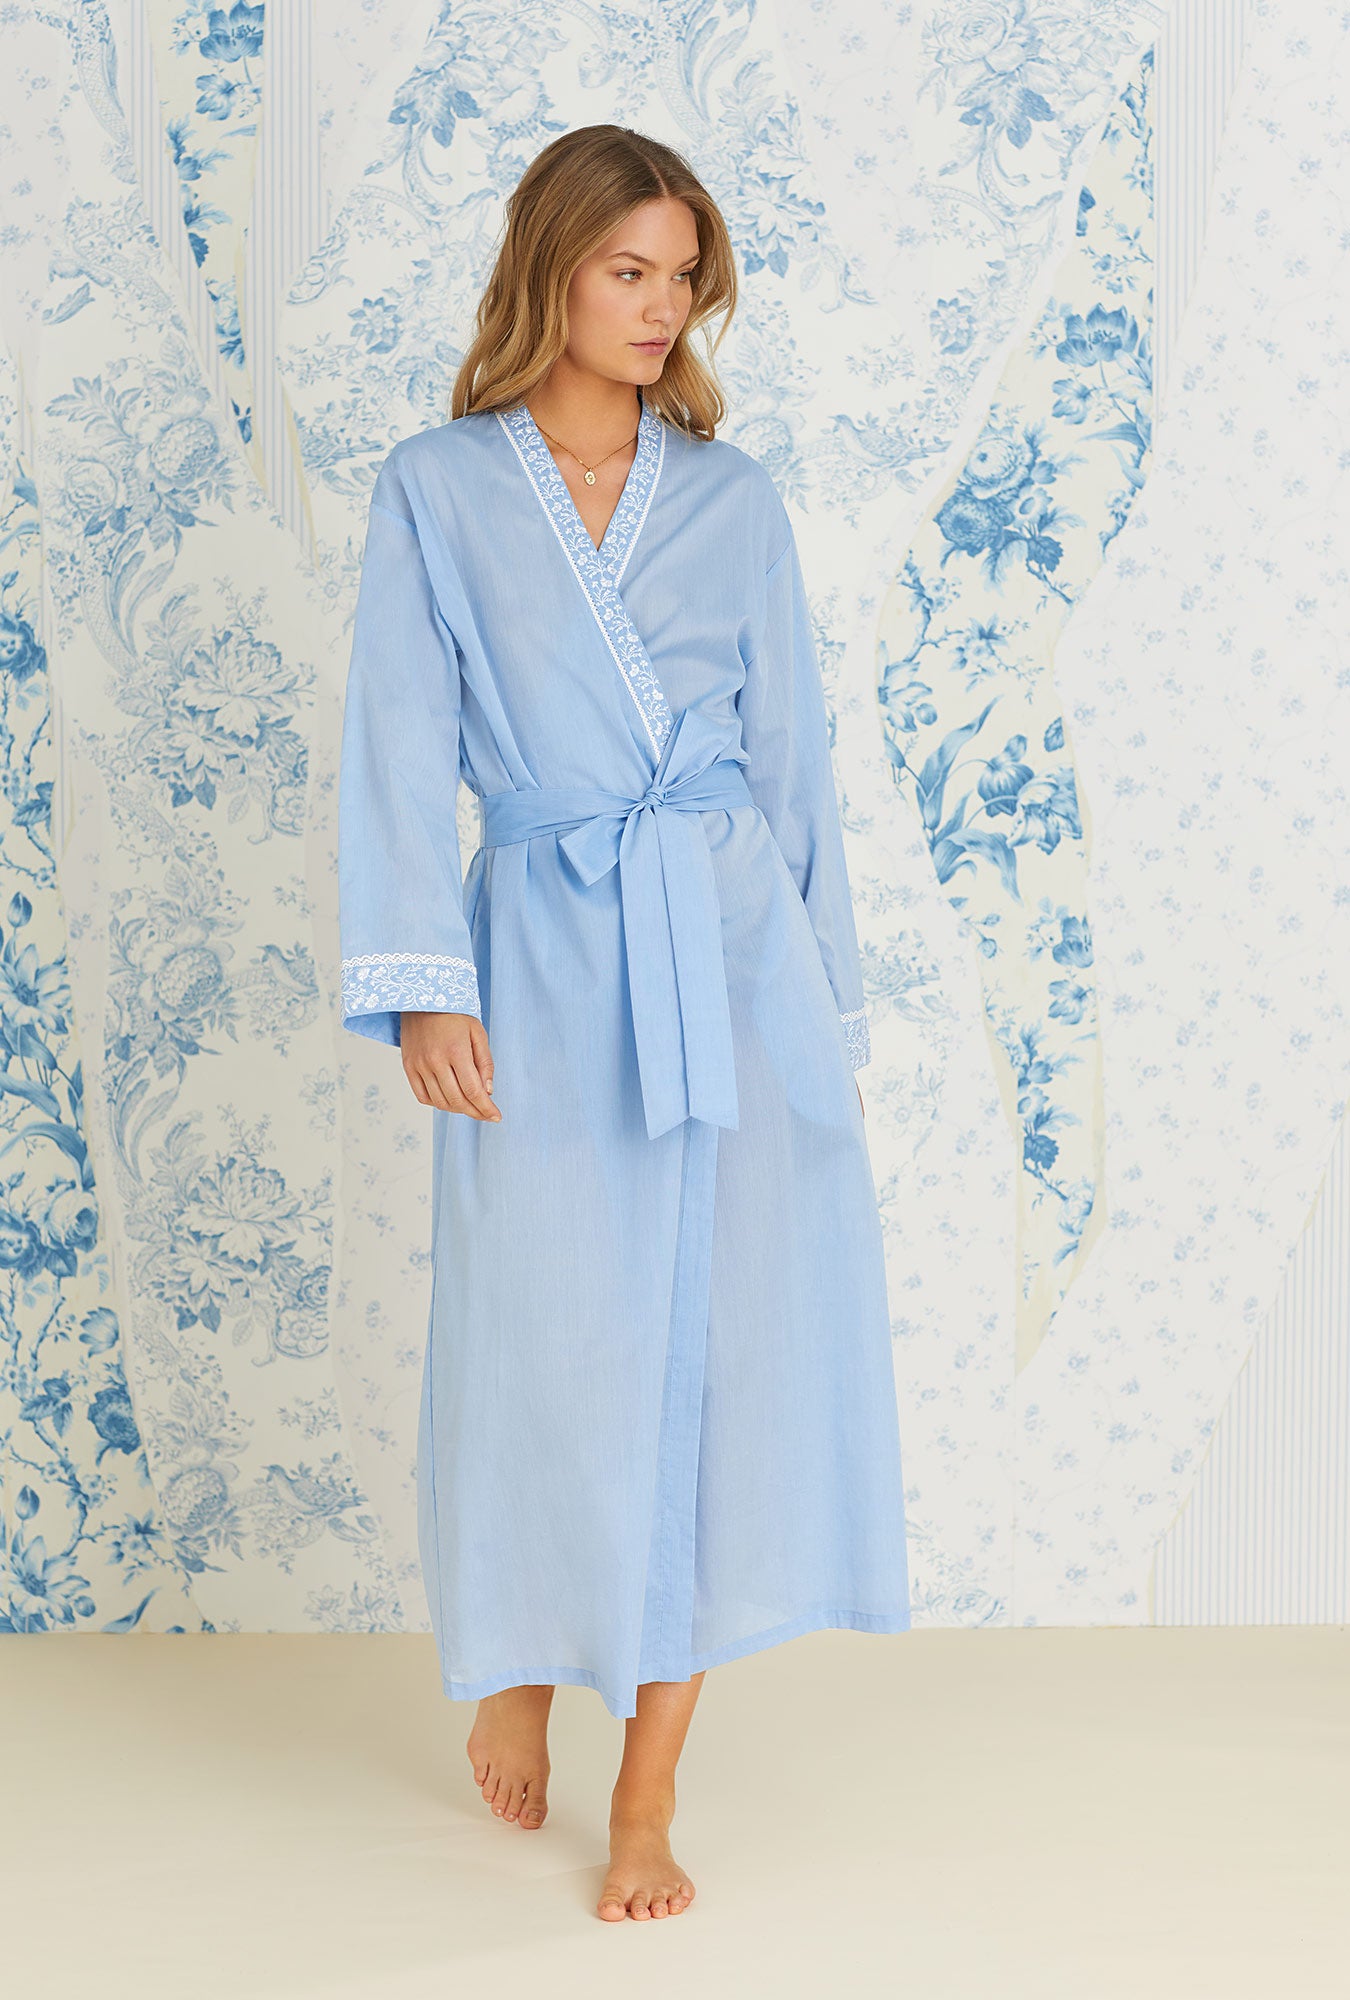 A lady wearing long sleeve blue cotton chambray long wrap robe.